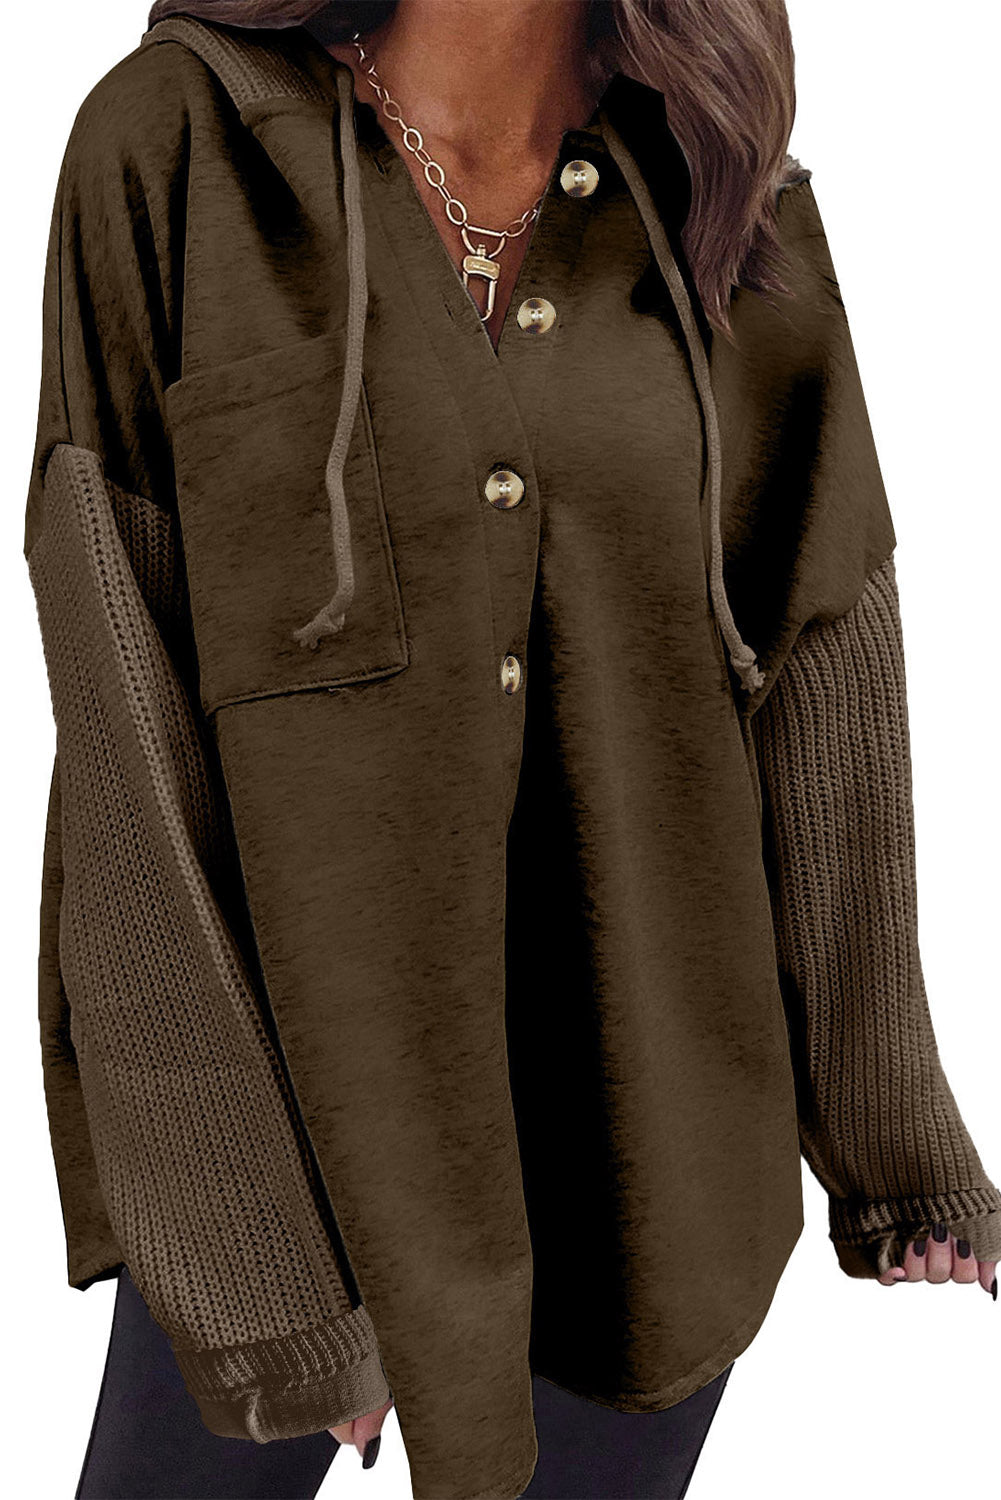 Dark Brown Button Up Crochet Knitted Sleeve Hoodie